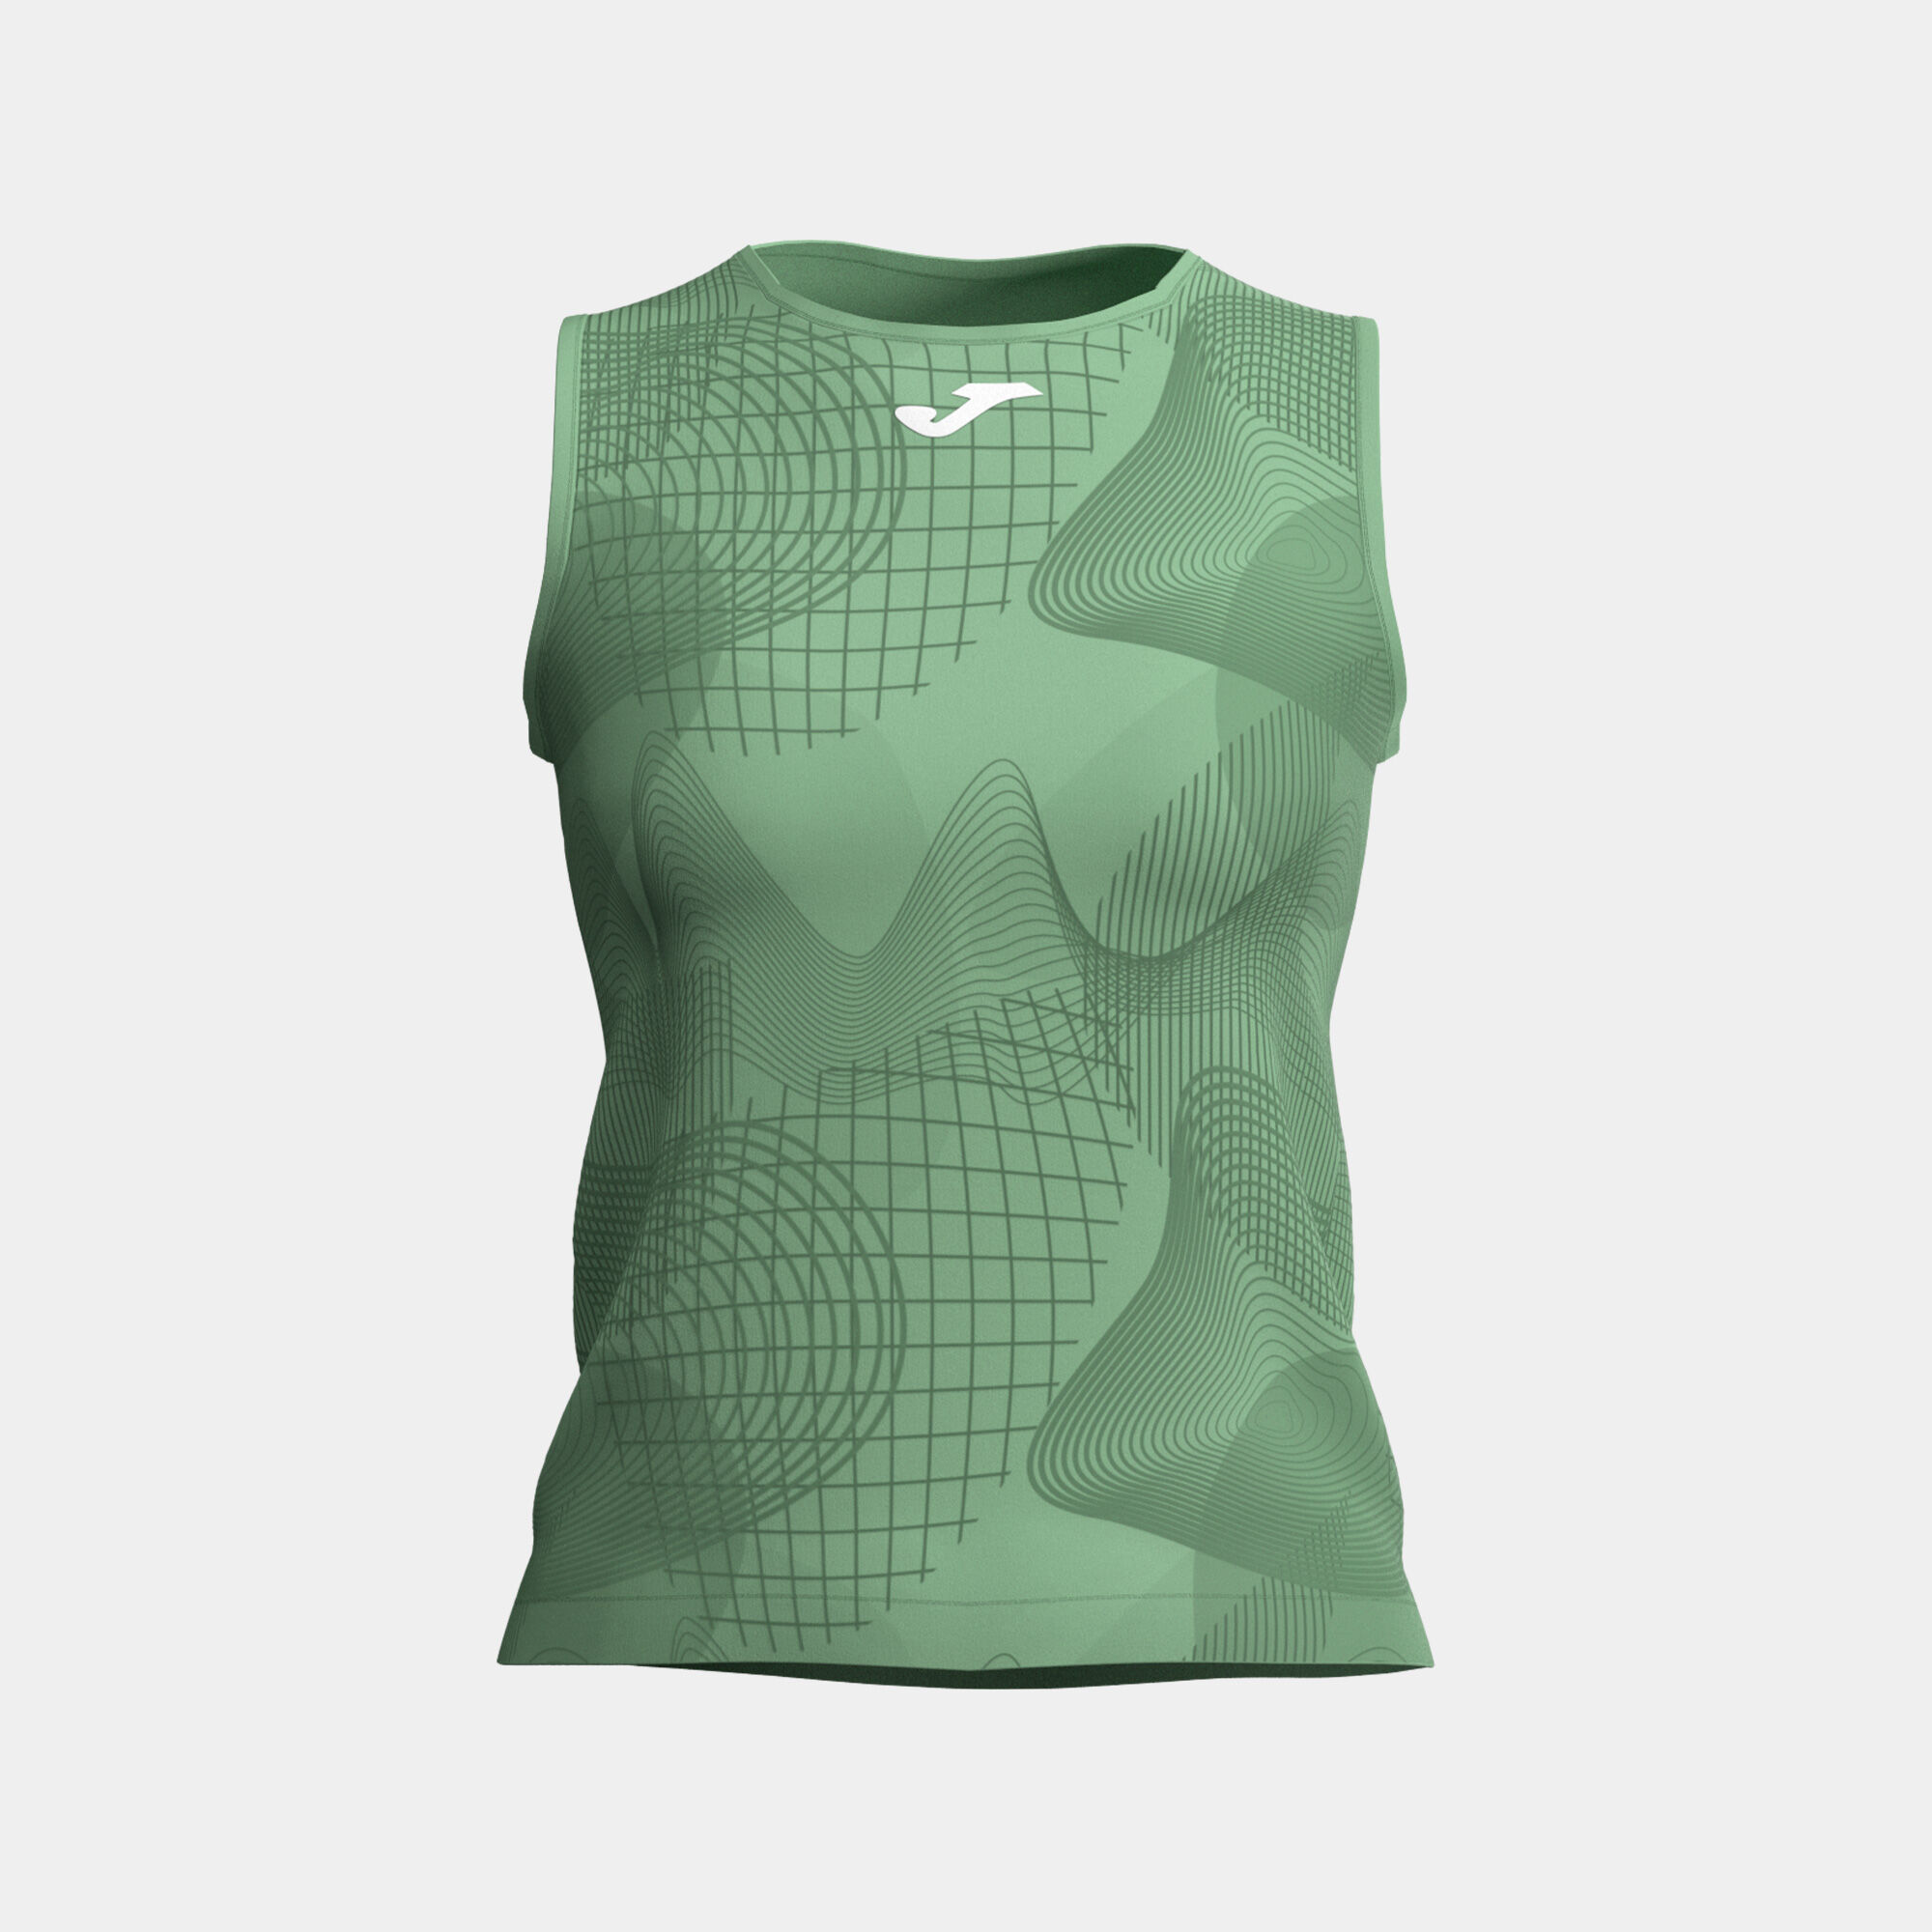 Camiseta tirantes mujer Challenge verde